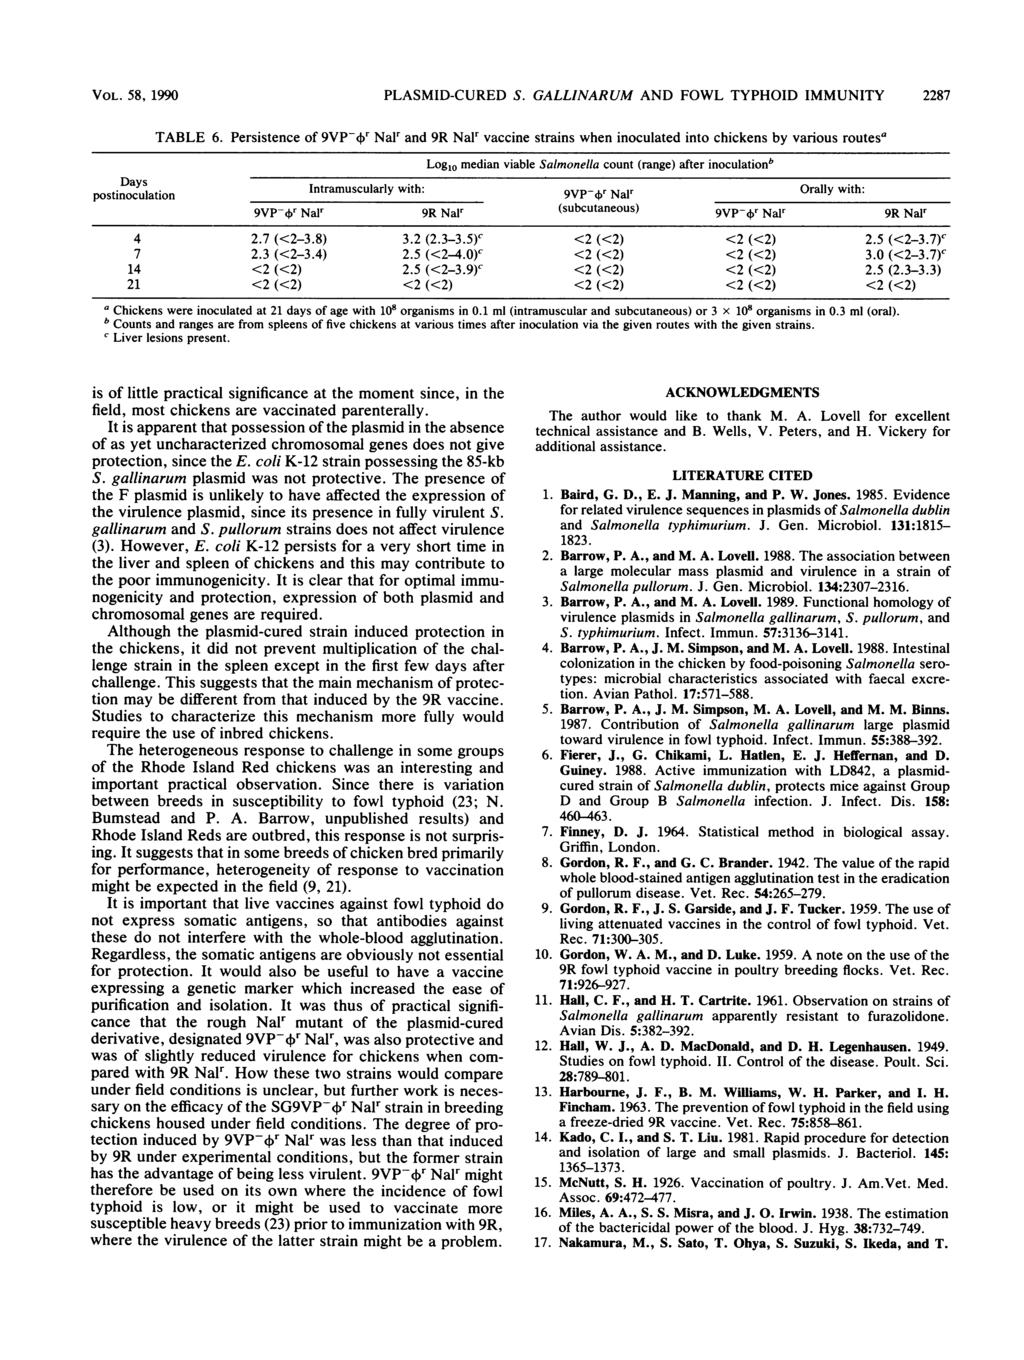 VOL. 58, 1990 PLASMID-CURED S. GALLINARUM AND FOWL TYPHOID IMMUNITY 2287 TABLE 6.